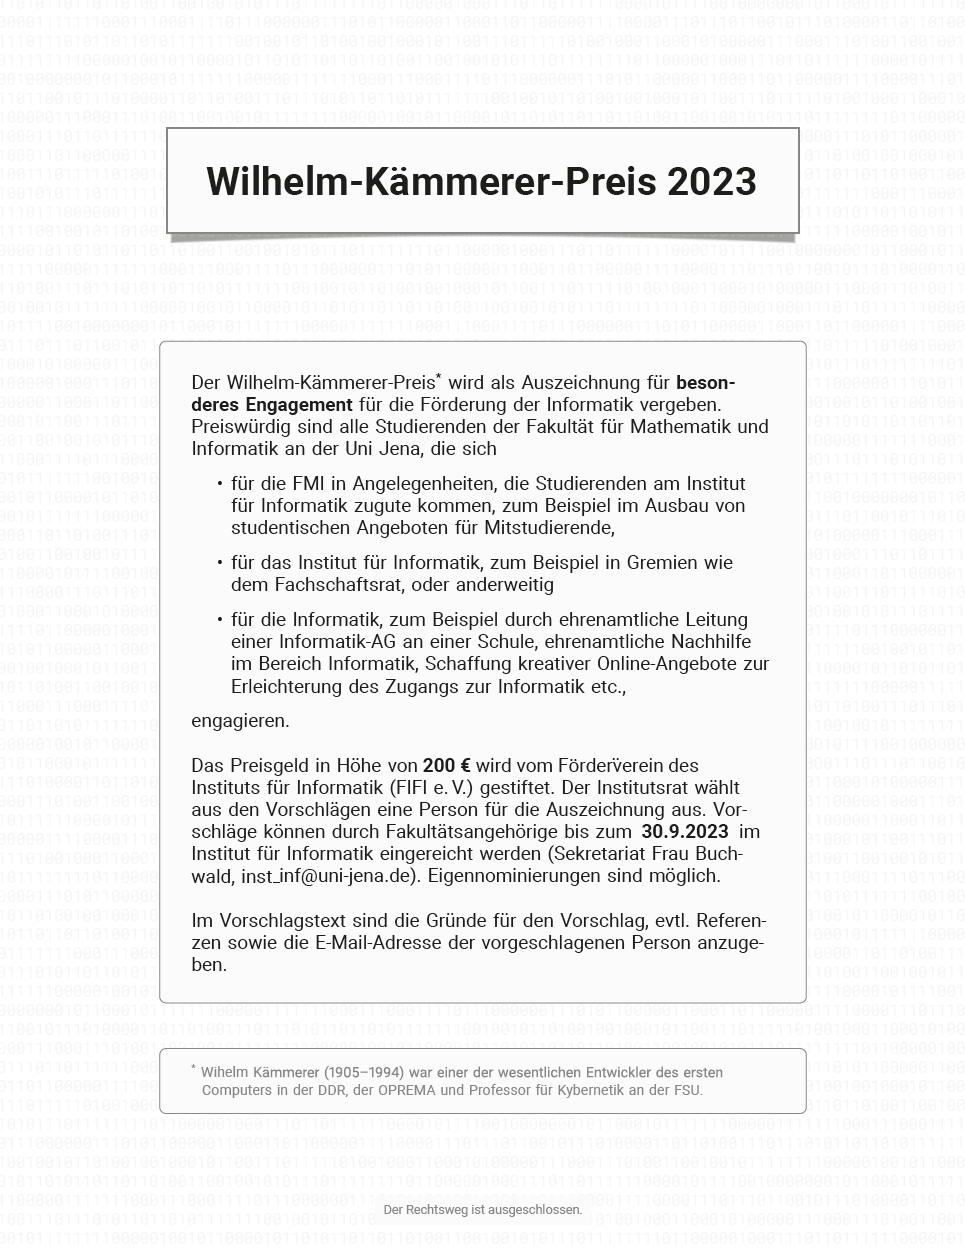 Wilhelm-Kämmerer-Preis 2023